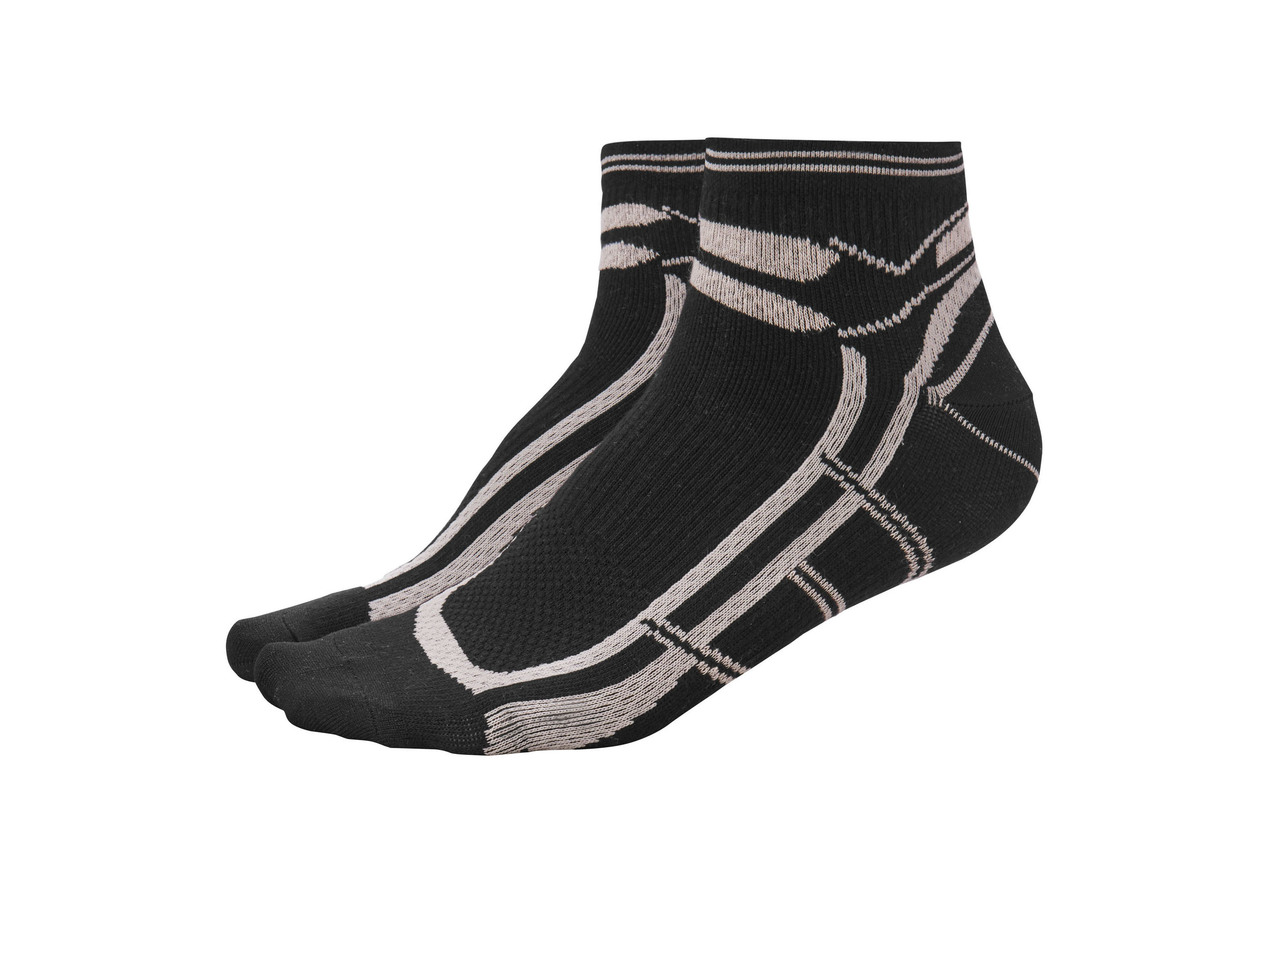 Men's Sports Socks, 2 pairs